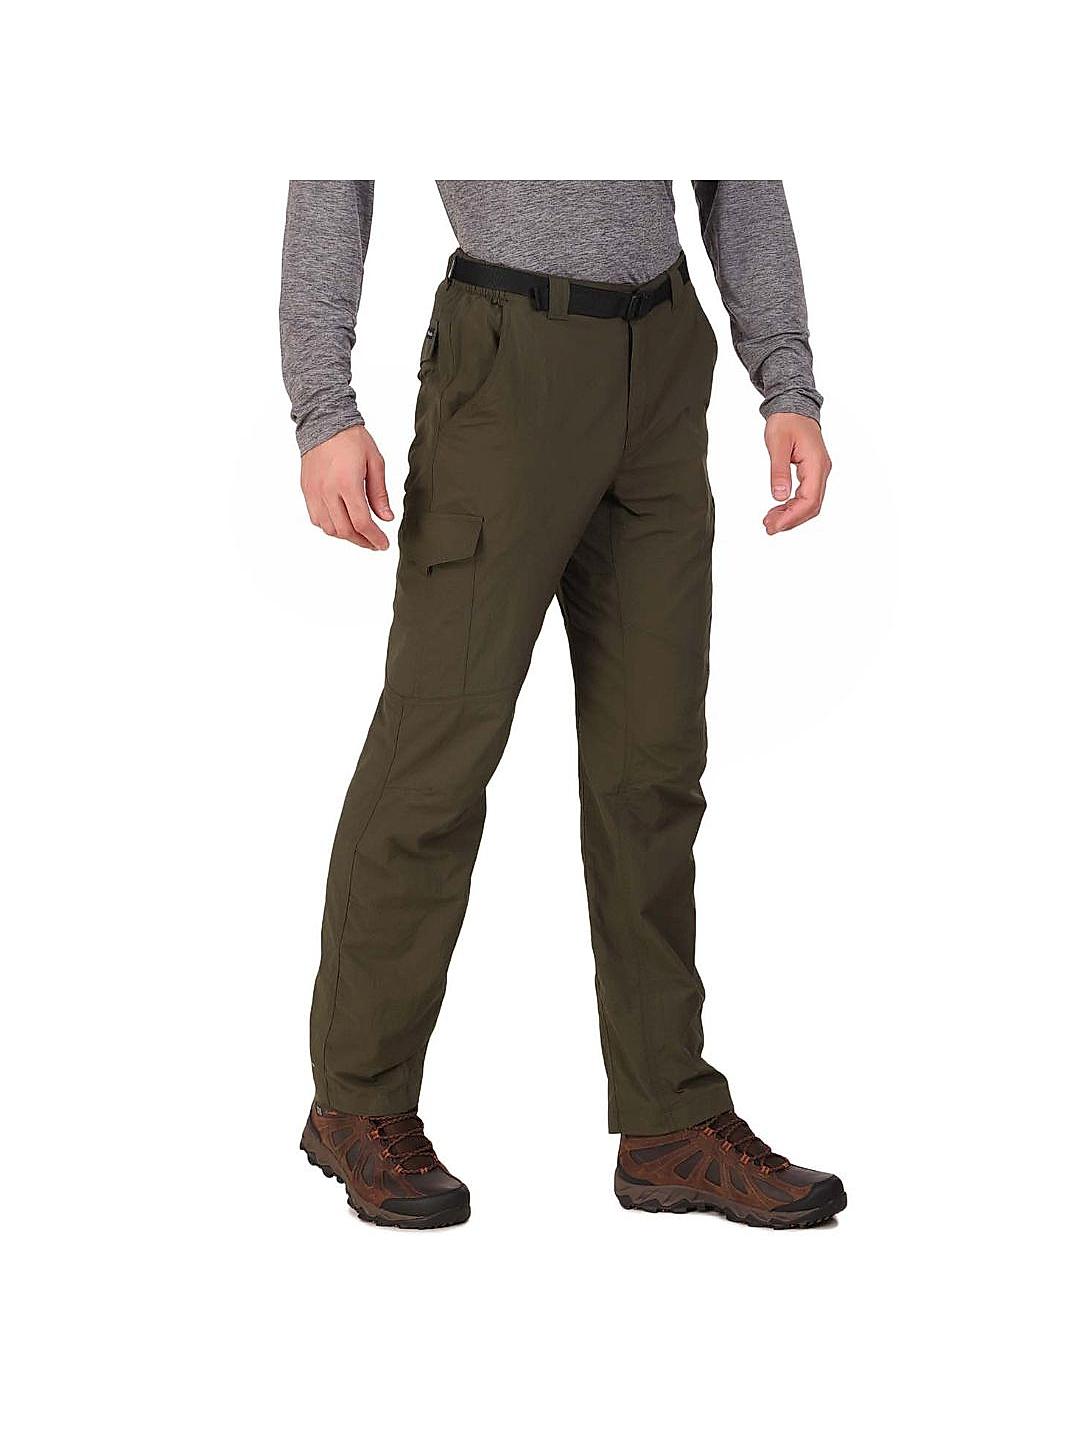 Buy Green Silver Ridge Cargo Pant for Men Online at Columbia Sportswear